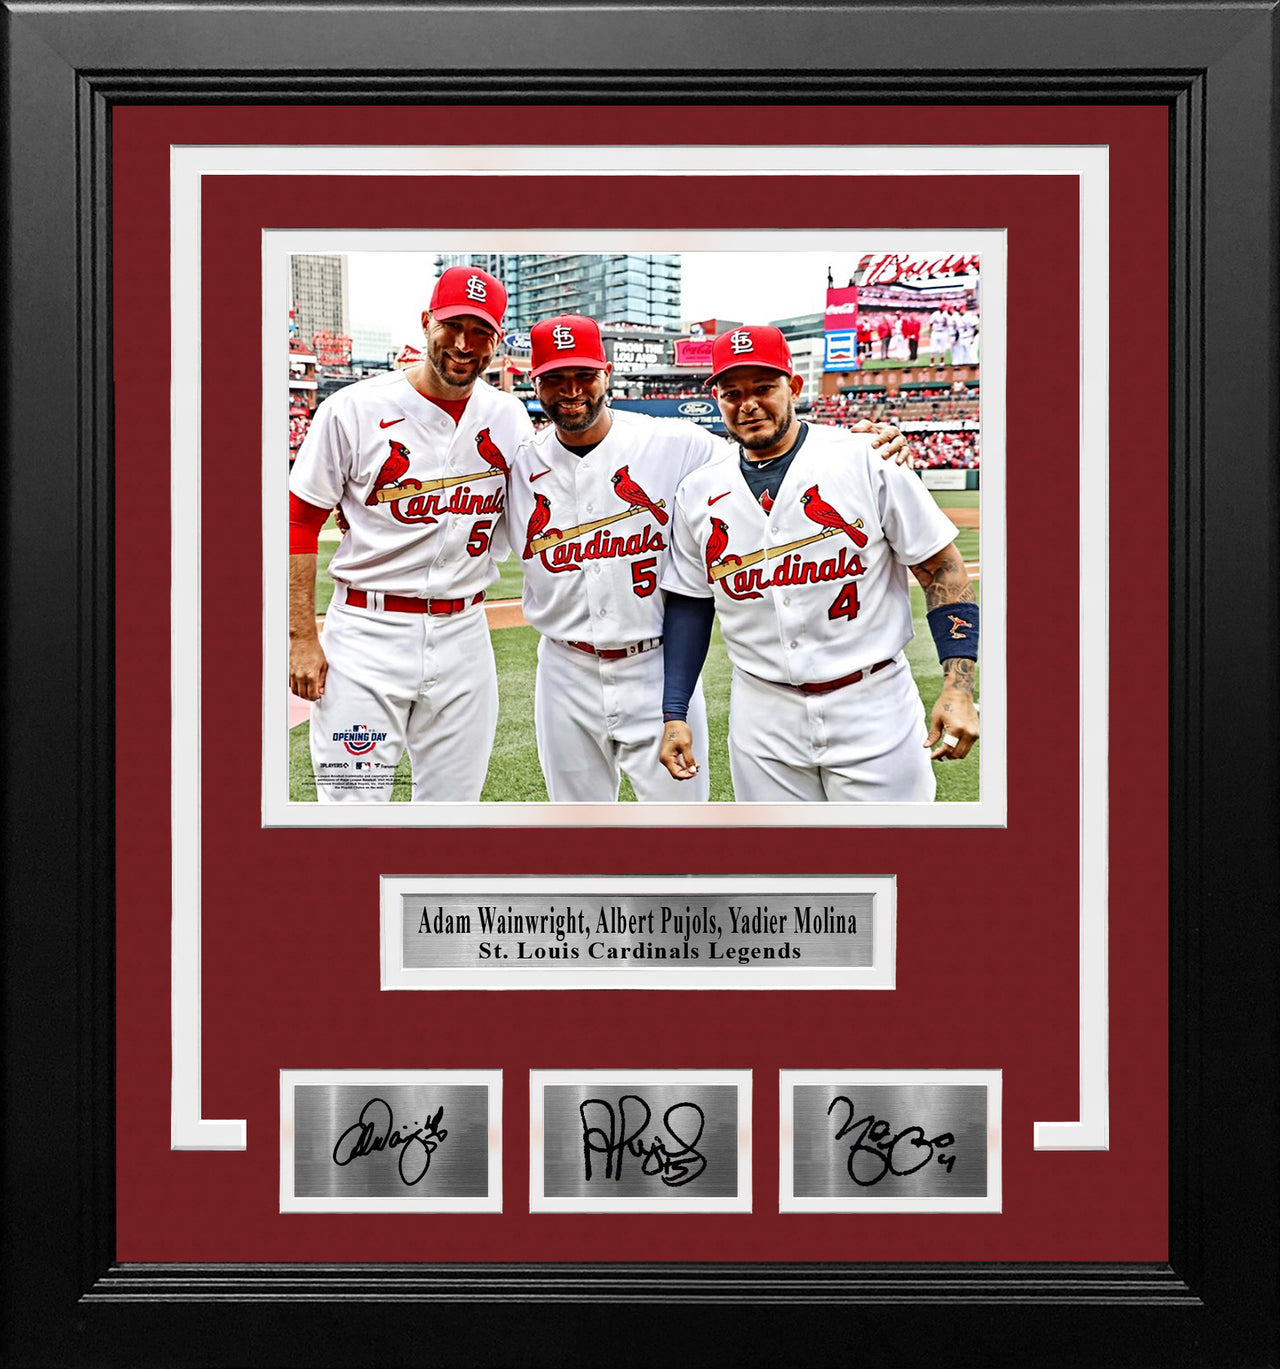 Adam Wainwright, Albert Pujols, & Yadier Molina Cardinals 8x10 Framed Photo with Engraved Autographs - Dynasty Sports & Framing 